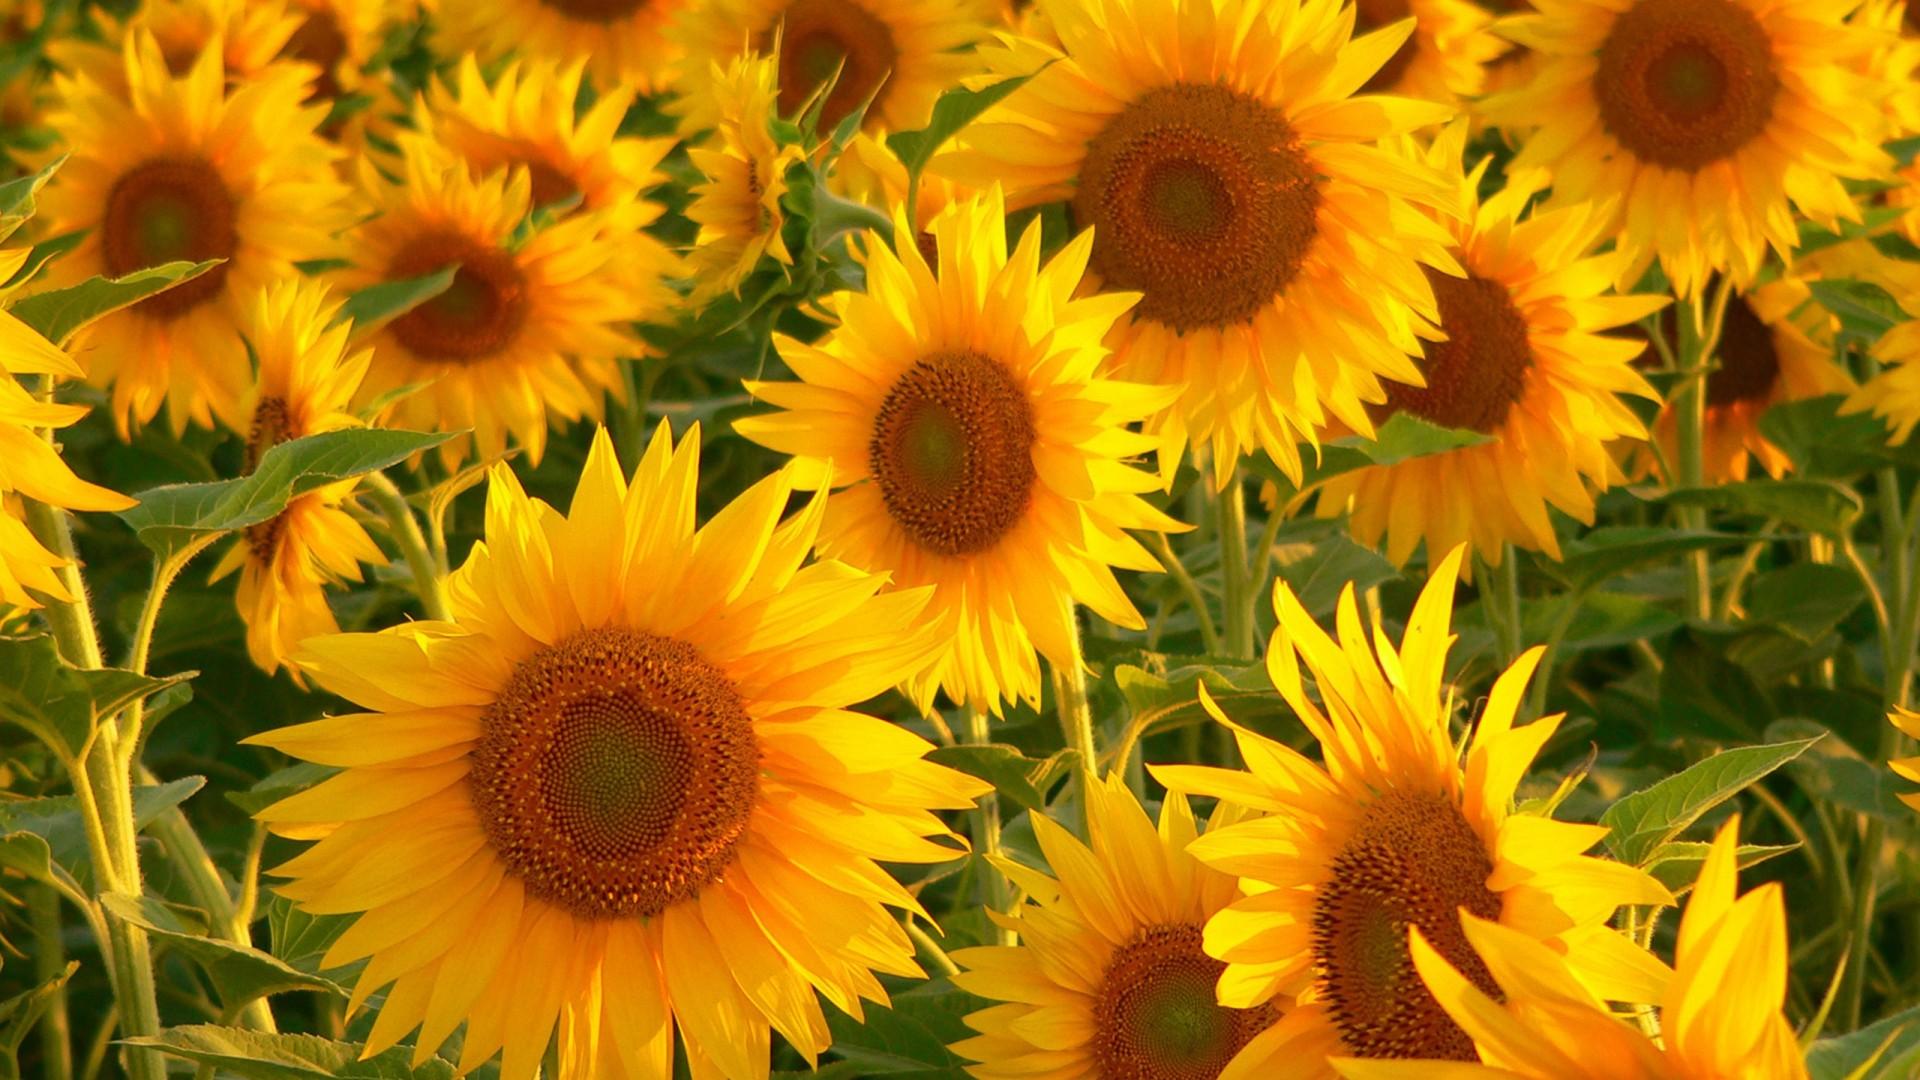 Sunflower Best Flower Wallpaper In HD 74, Wallpaper13.com